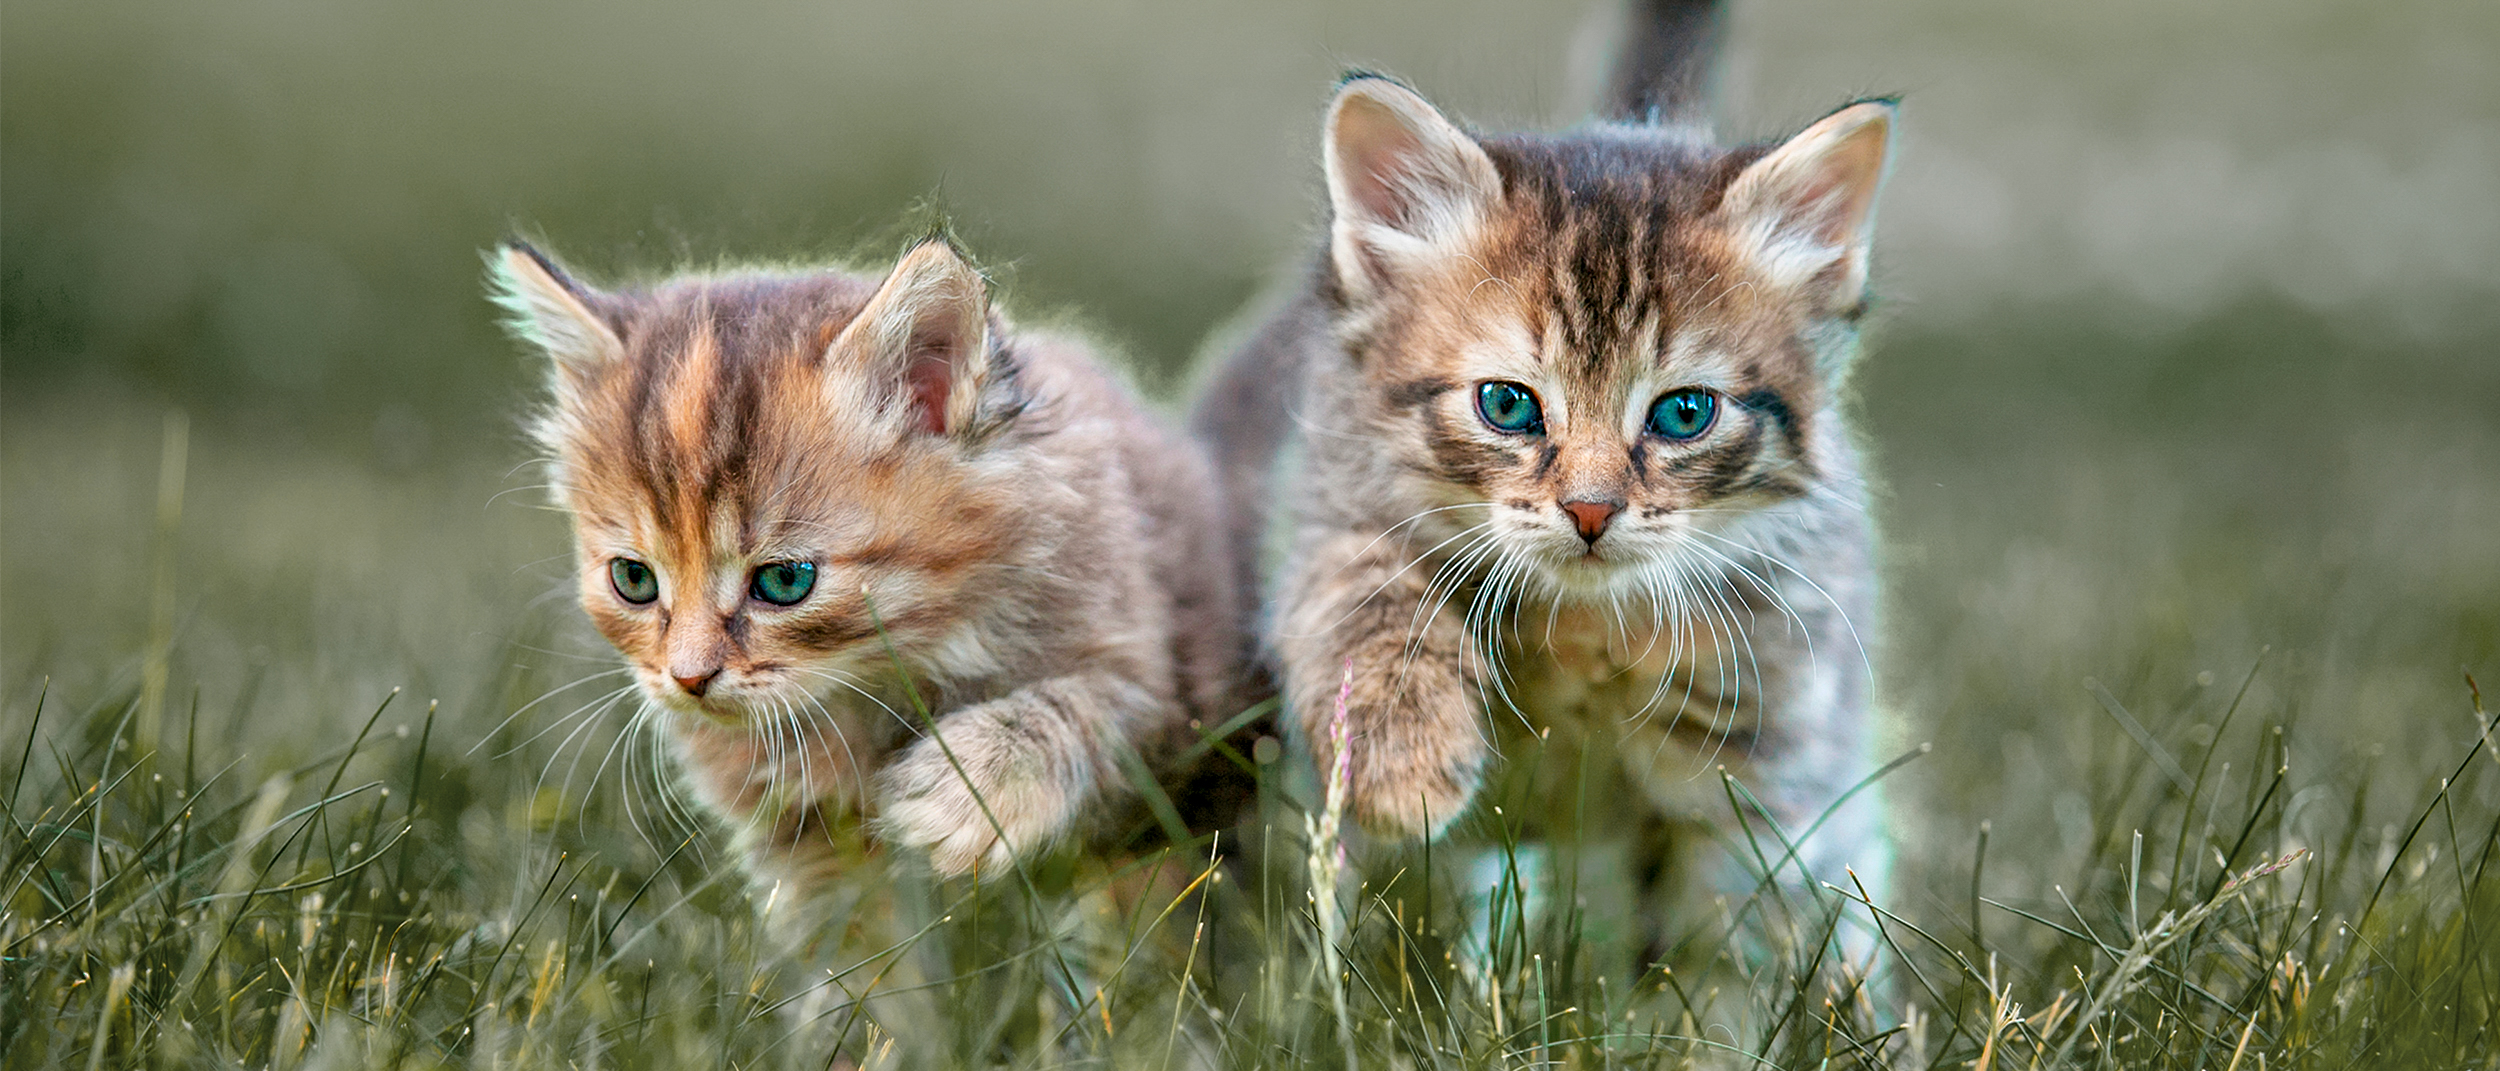 Kitten cats walking outdoors in long grass.